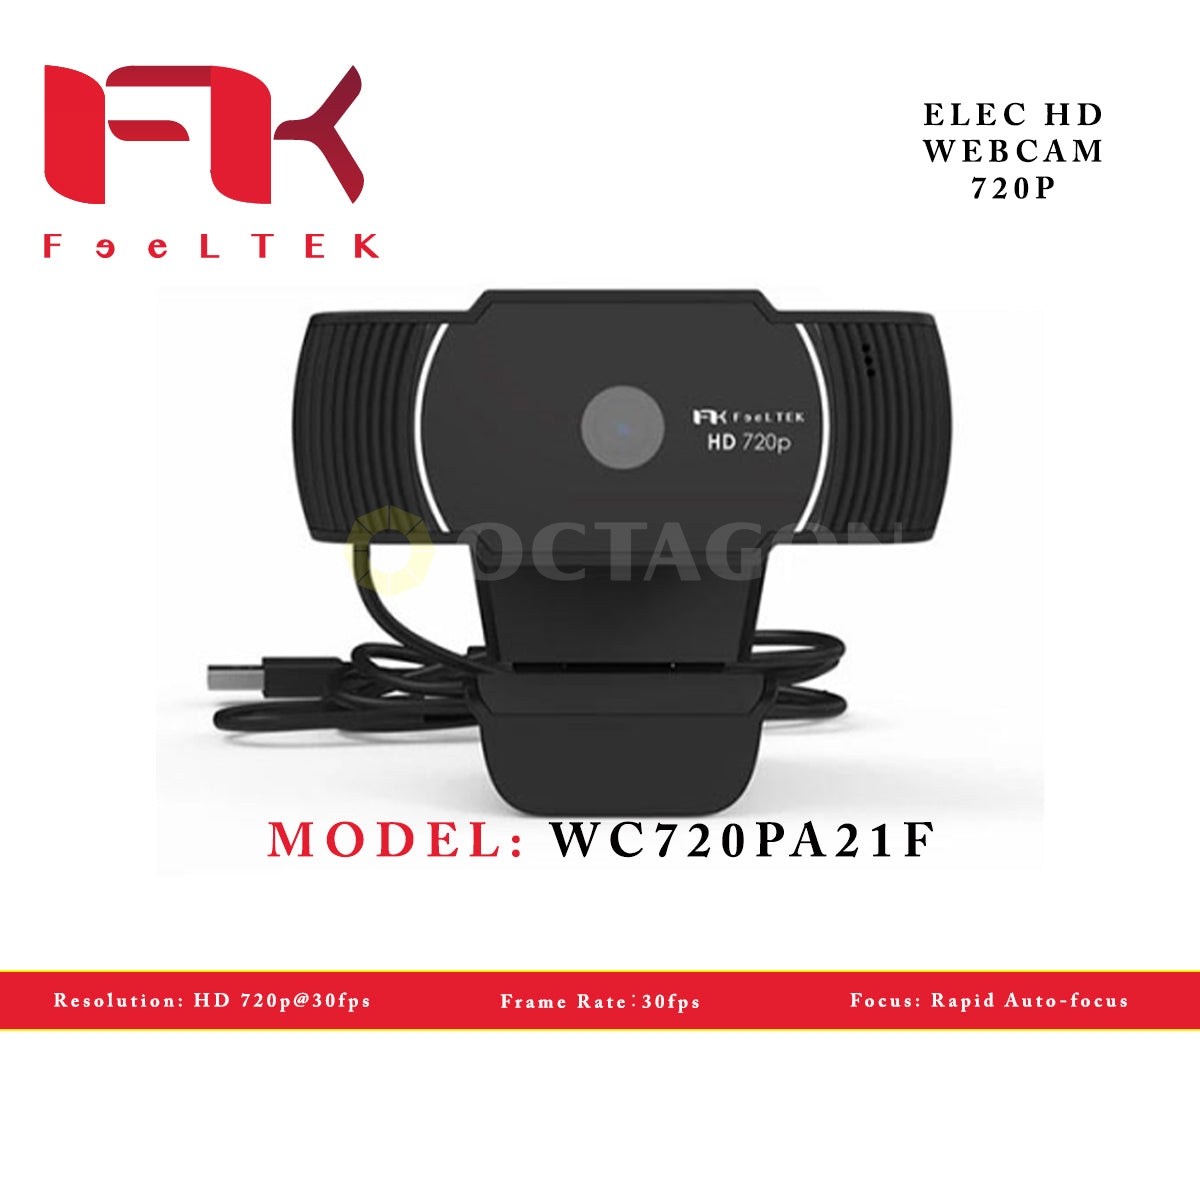 FEELTEK WC720PA21F ELEC HD WEBCAM 720P